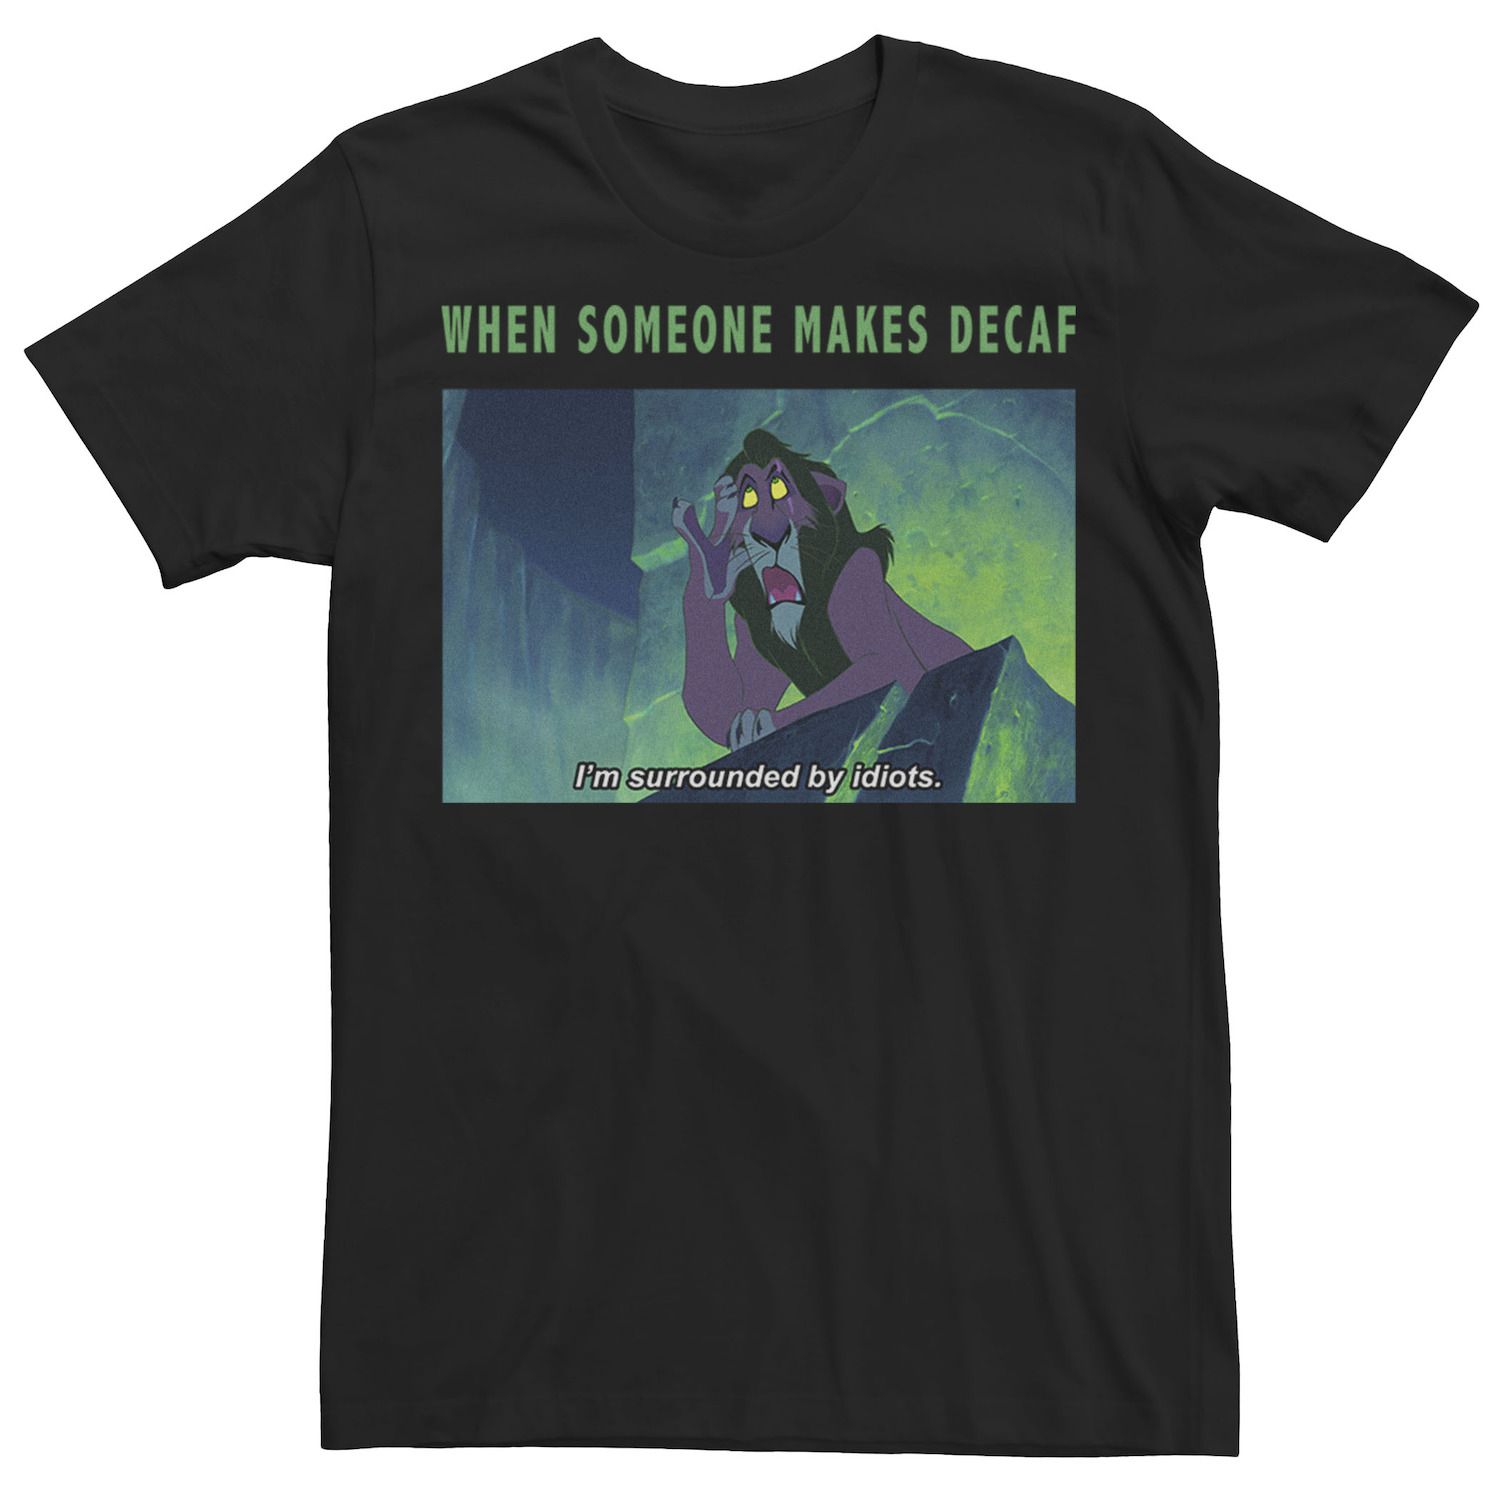 Мужская футболка Disney King Lion King Scar Decaf Coffee Meme с графическим рисунком Licensed Character, черный футболка lion king scar unleashed disney черный